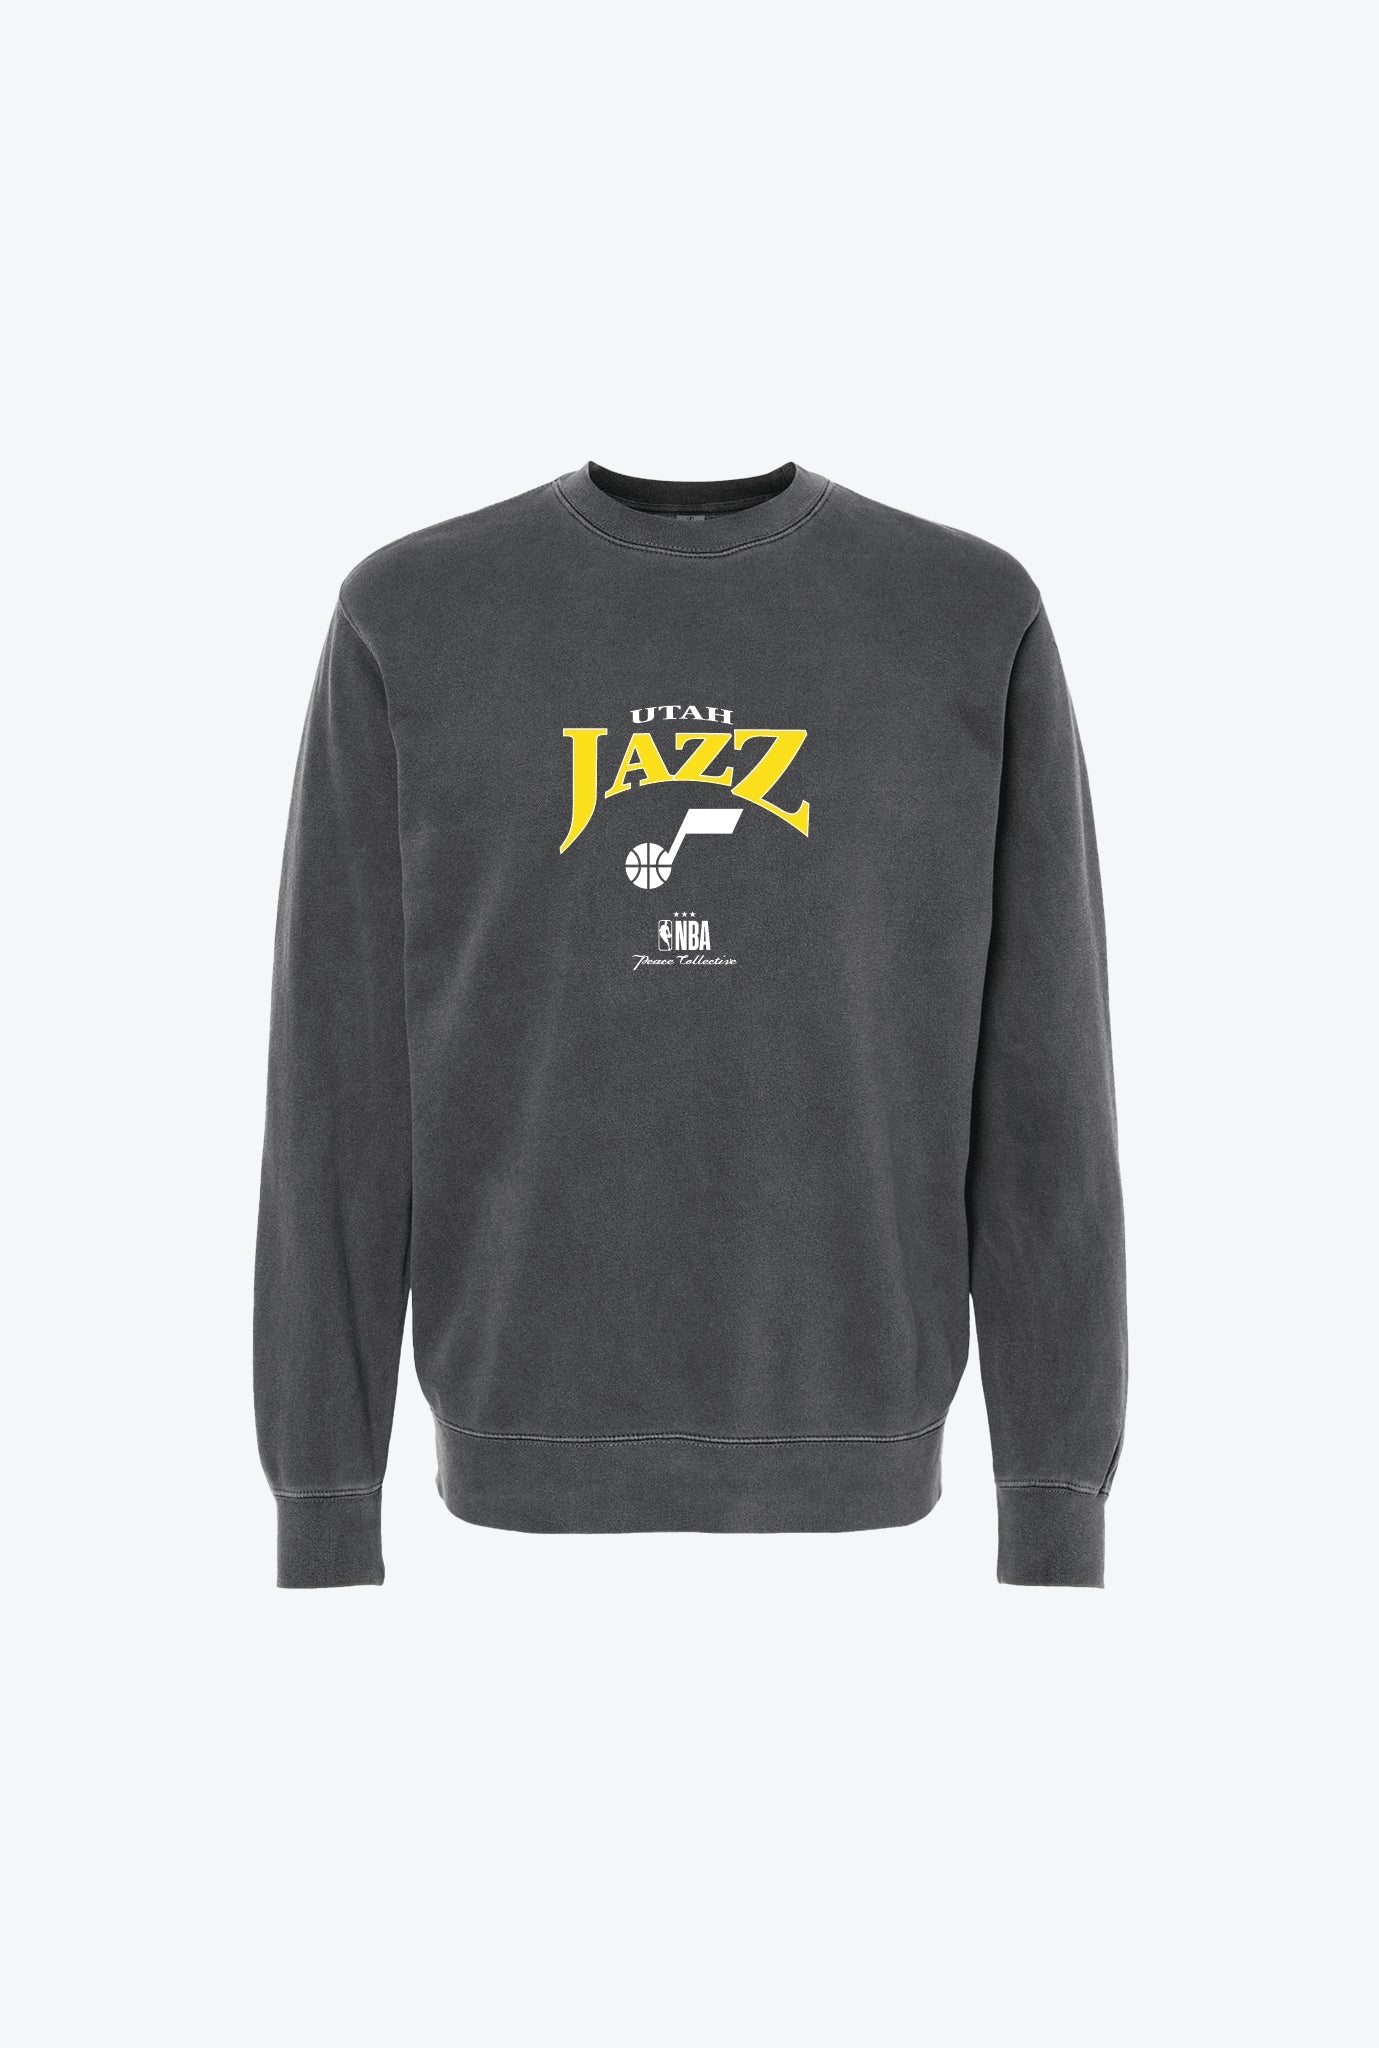 Utah Jazz Pigment Dye Crewneck - Black